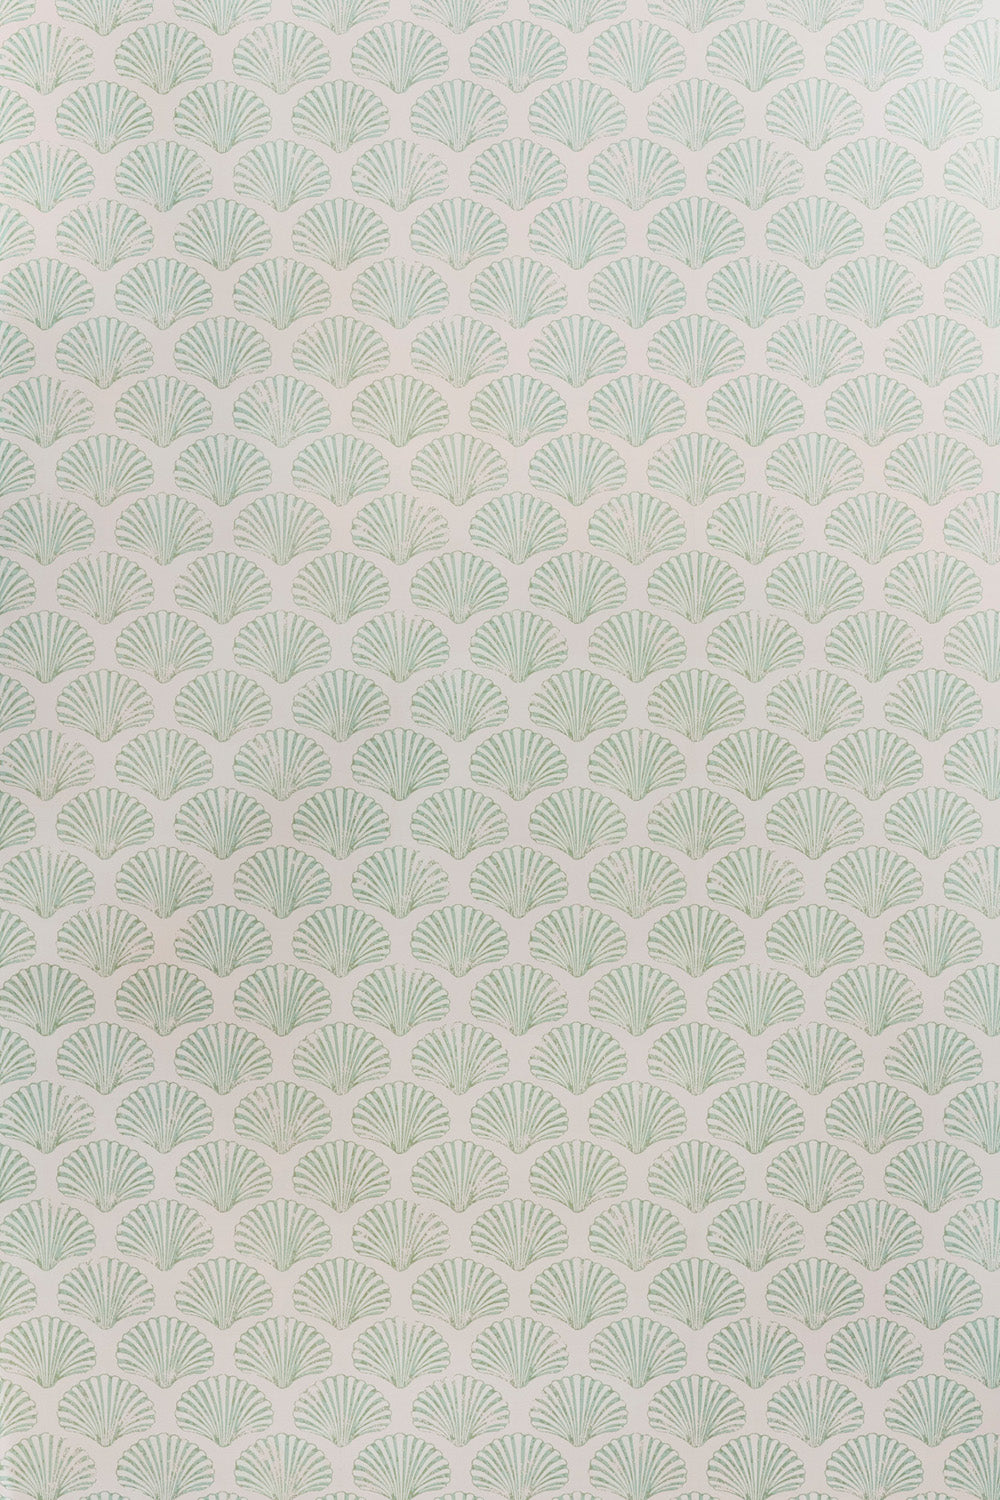 Scallop Shell Nursery Wallpaper - Green